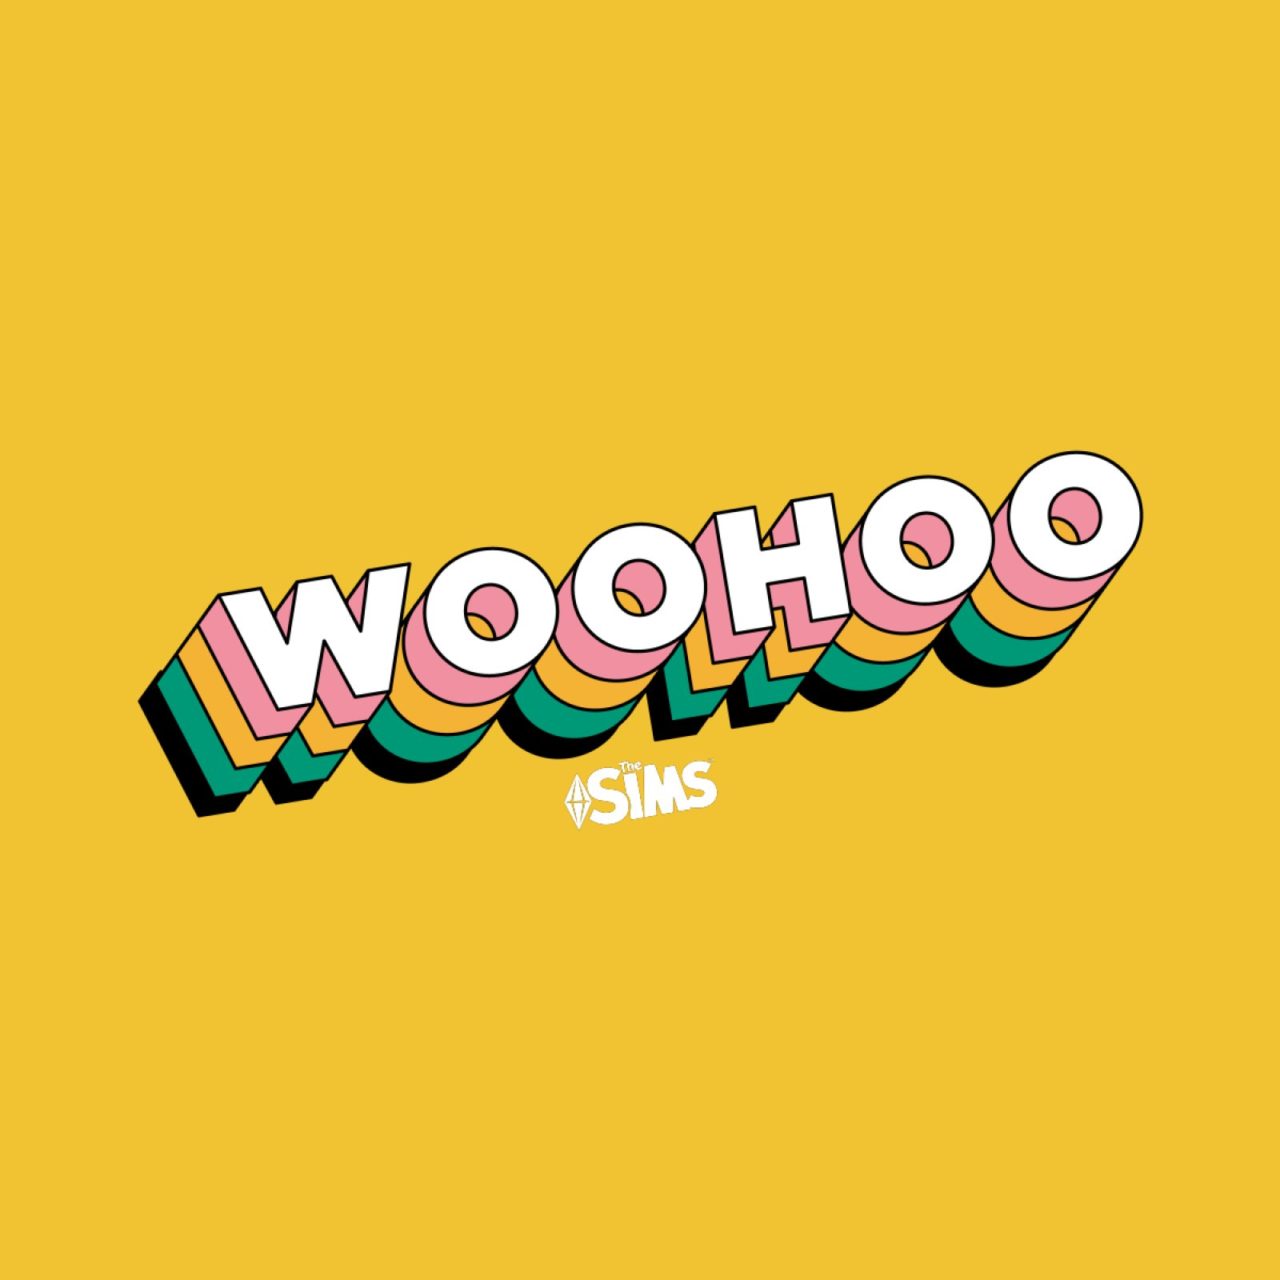 WooHoo design on a t-shirt